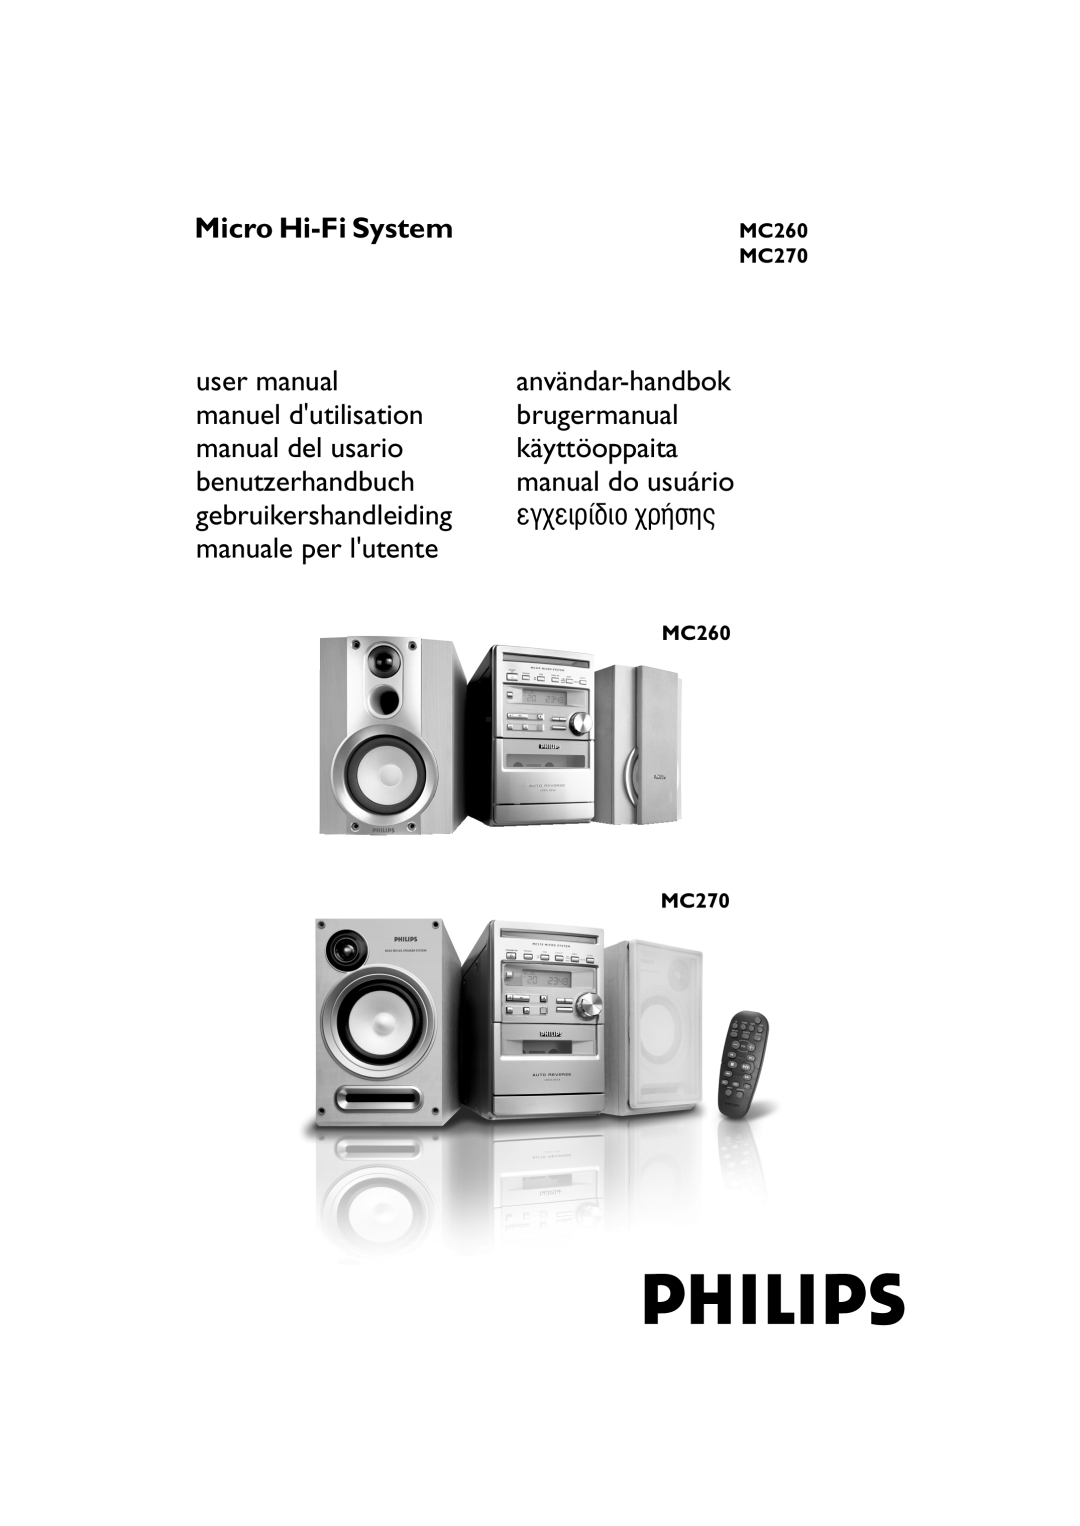 Philips user manual Micro Hi-FiSystem, MC260 MC270, manuel dutilisation, brugermanual, manual del usario, käyttöoppaita 